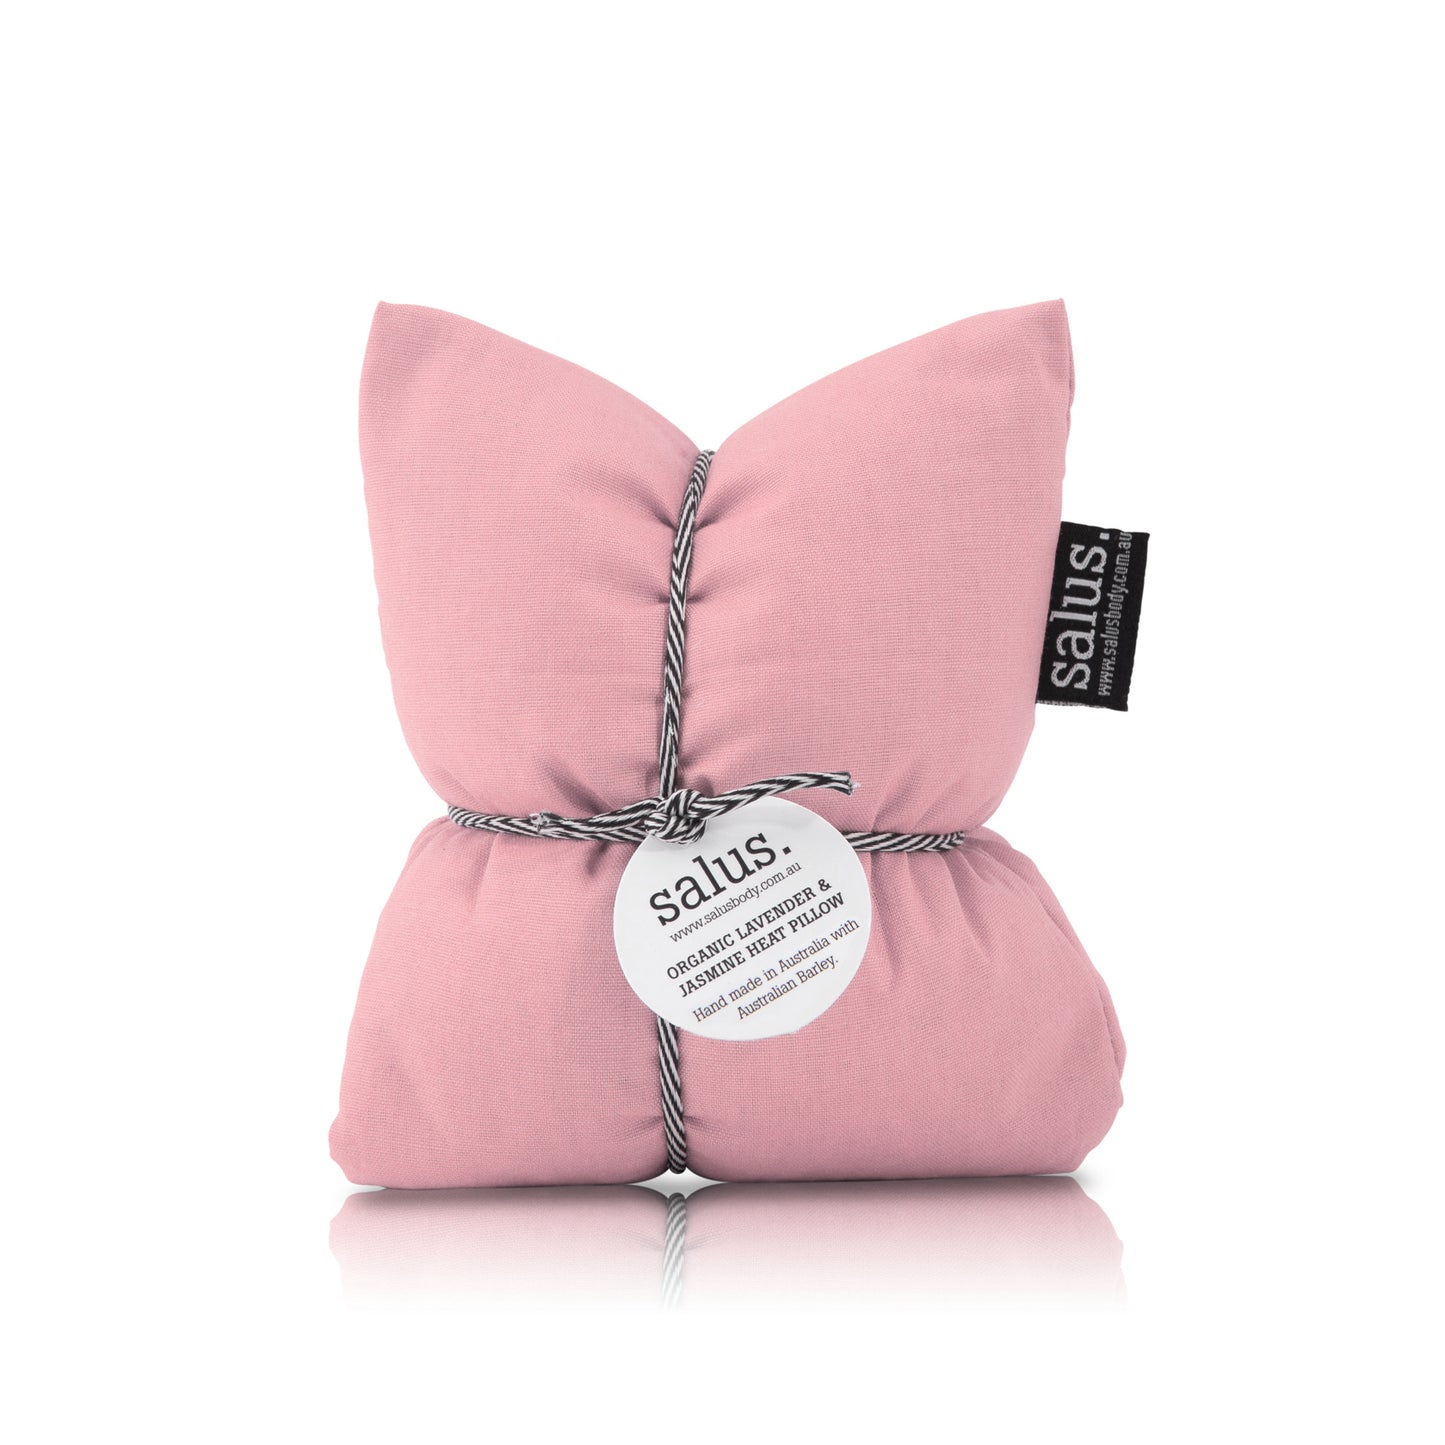 Salus Lavender & Jasmine Heat Pillows